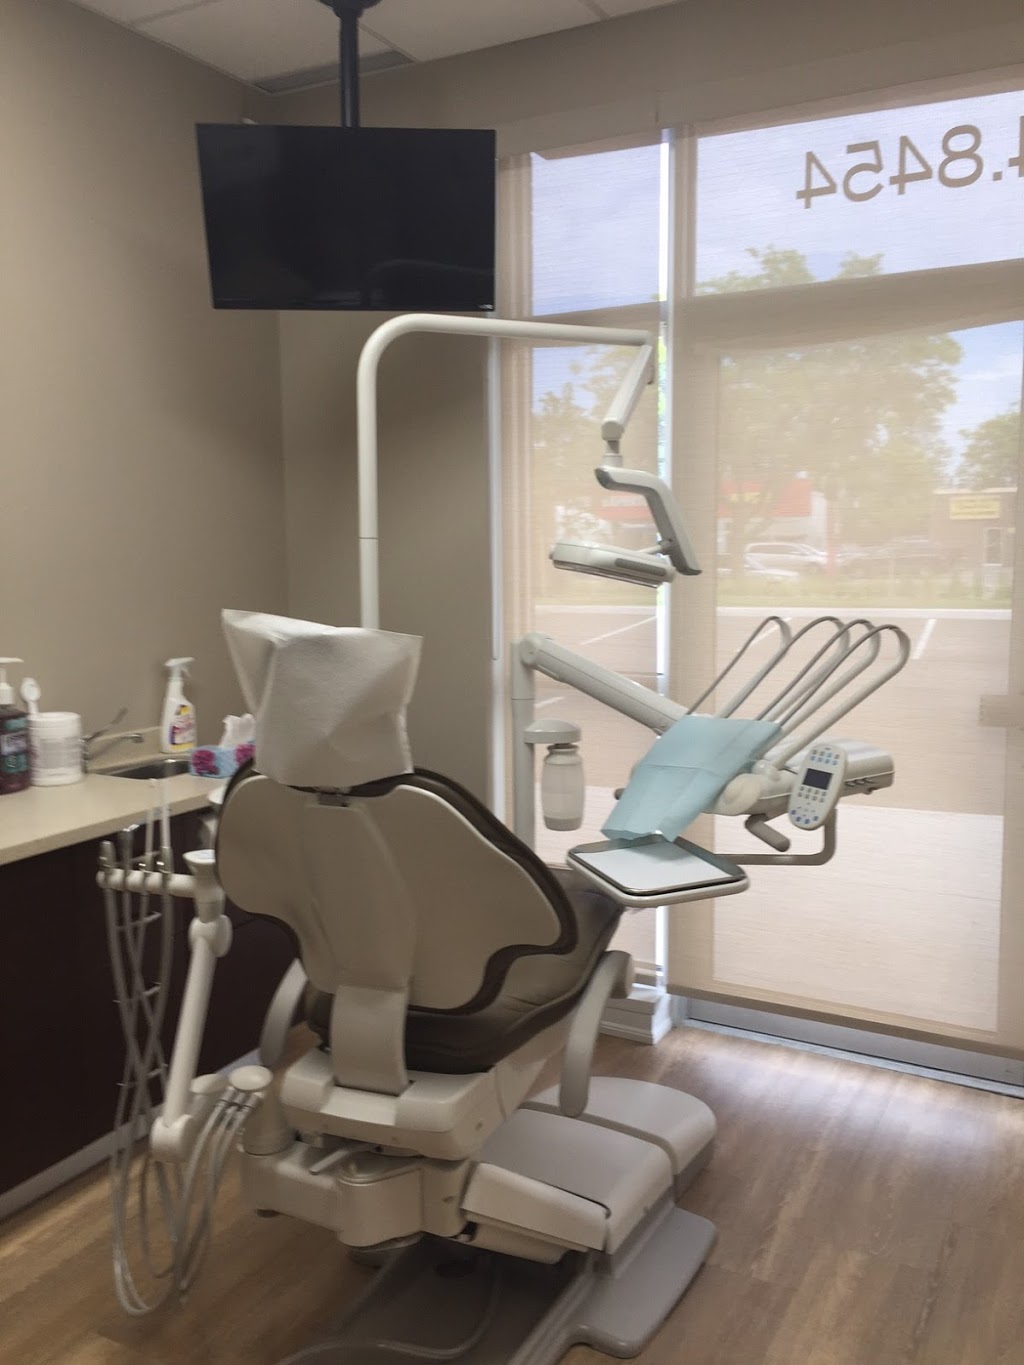 Dr. Irina Vlasic Prelovec- Speers Dental Centre | dentist | 225 Speers Rd #2, Oakville, ON L6K 0J4, Canada | 9058448454 OR +1 905-844-8454